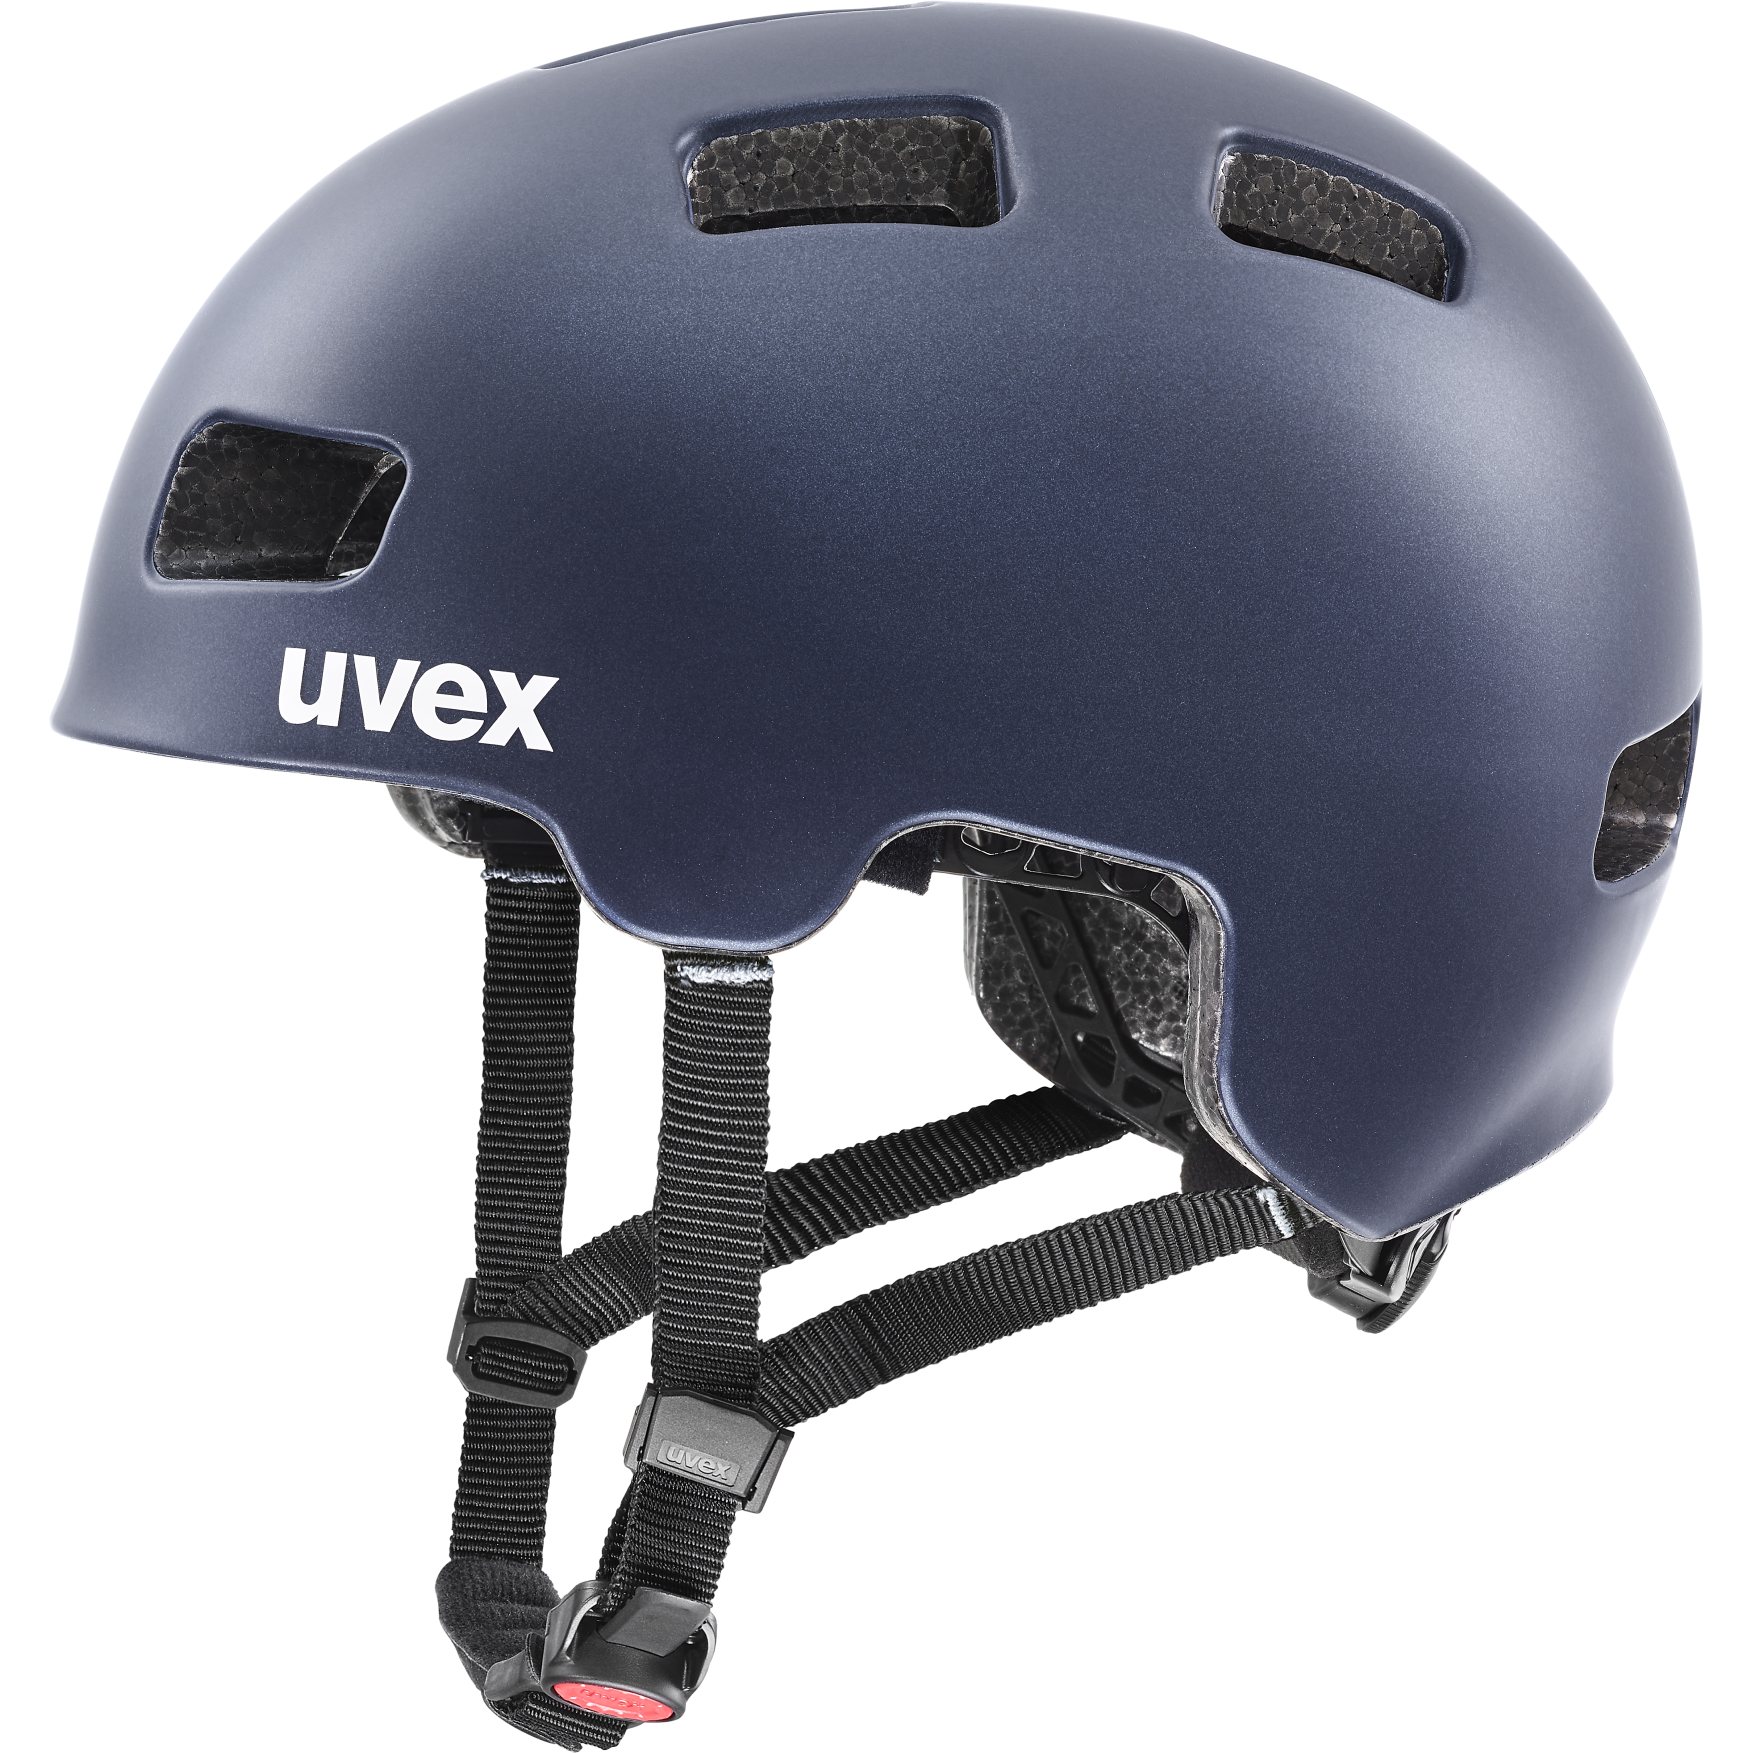 Picture of Uvex hlmt 4 cc Kids Helmet - deep space matt